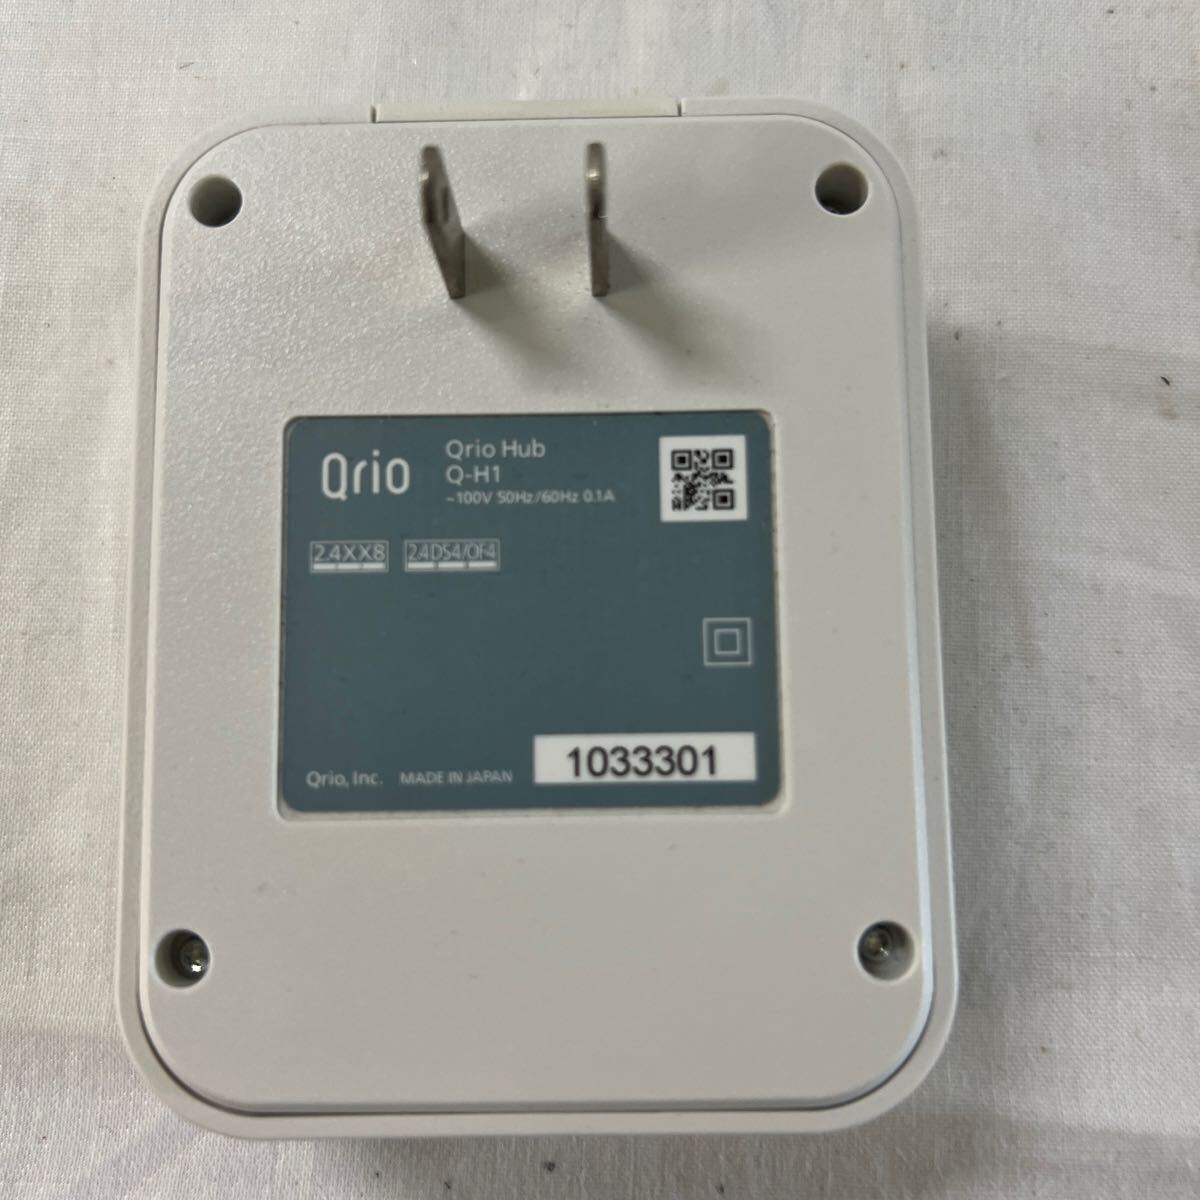  ▲ Qrio Hub キュリオハブ スマートロック Smart Lock Q-H1 Wi-Fi Bluetooth【OTUS-329】_画像3